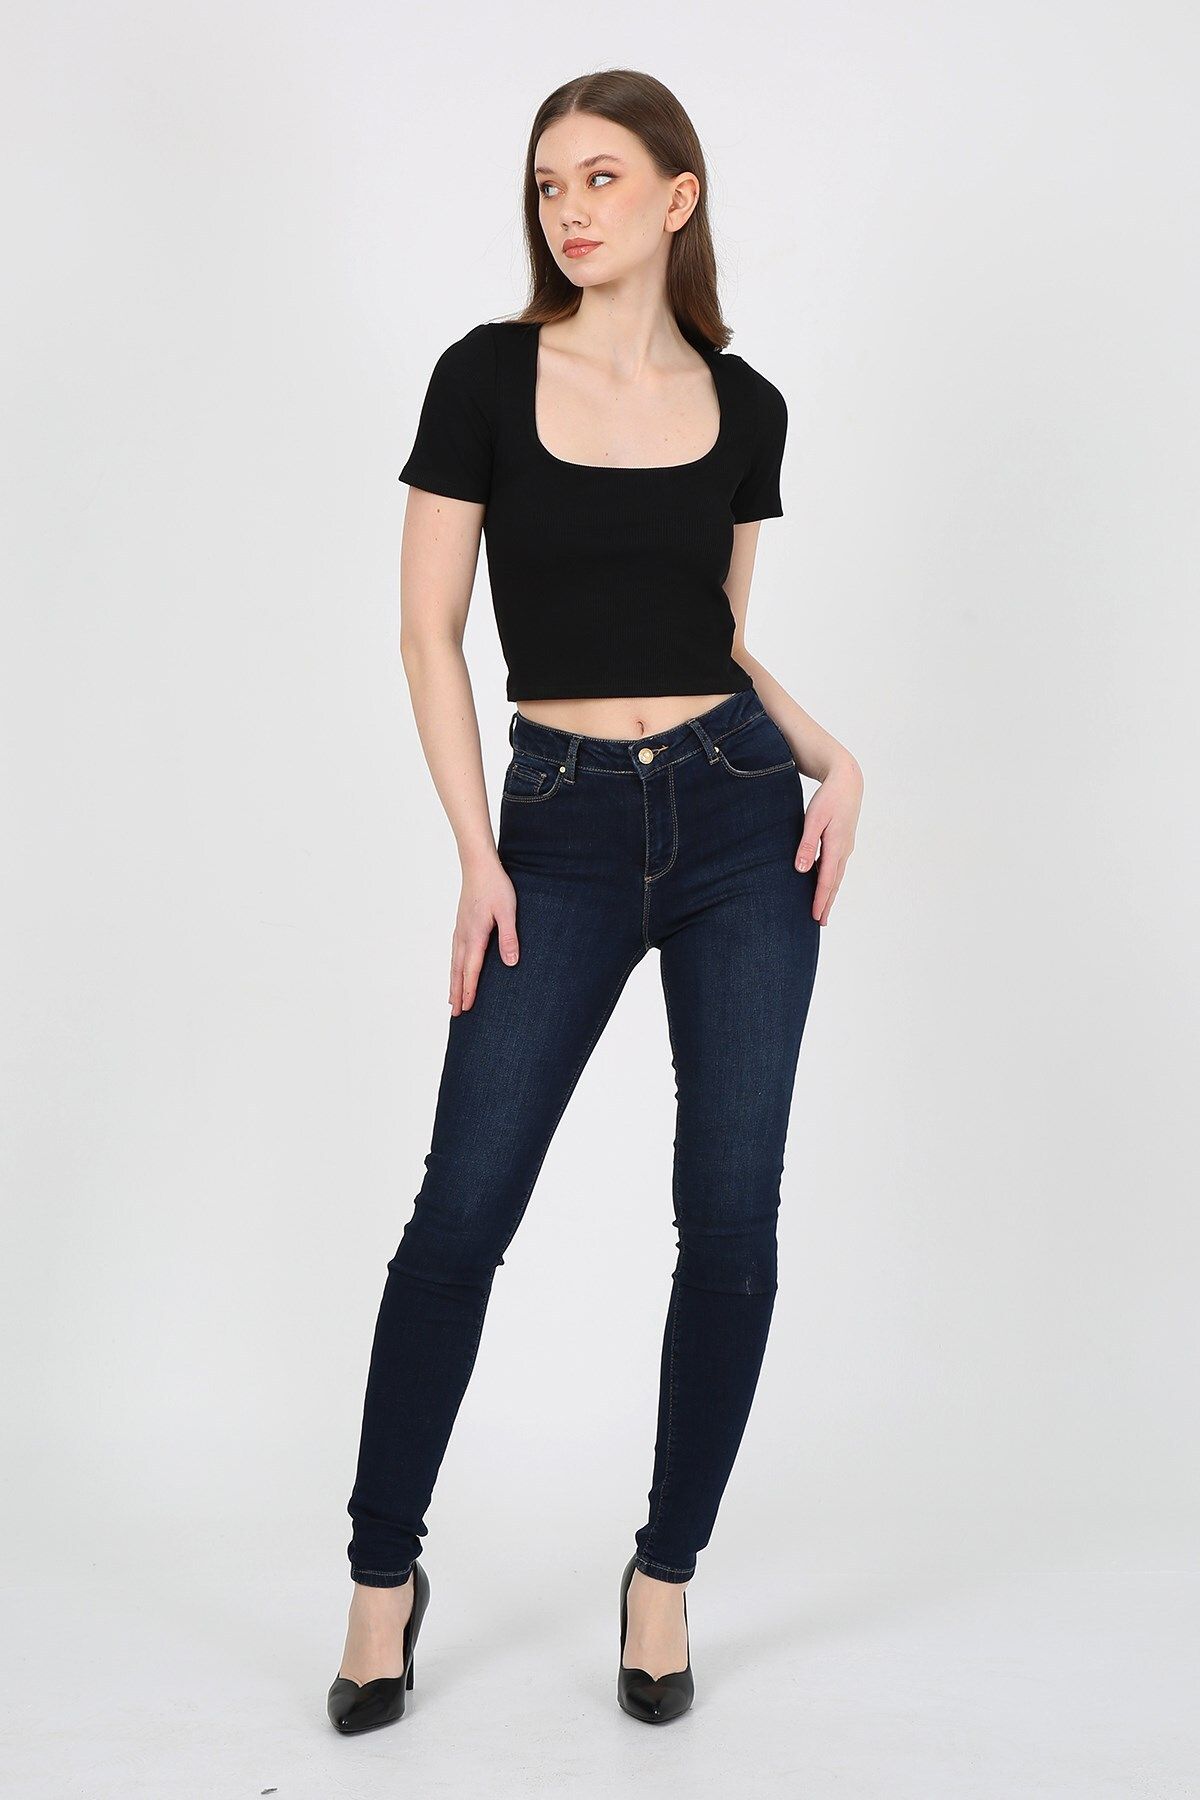 Twister Jeans Kadın Pantolon Mindy 9205-59 Dark Blue